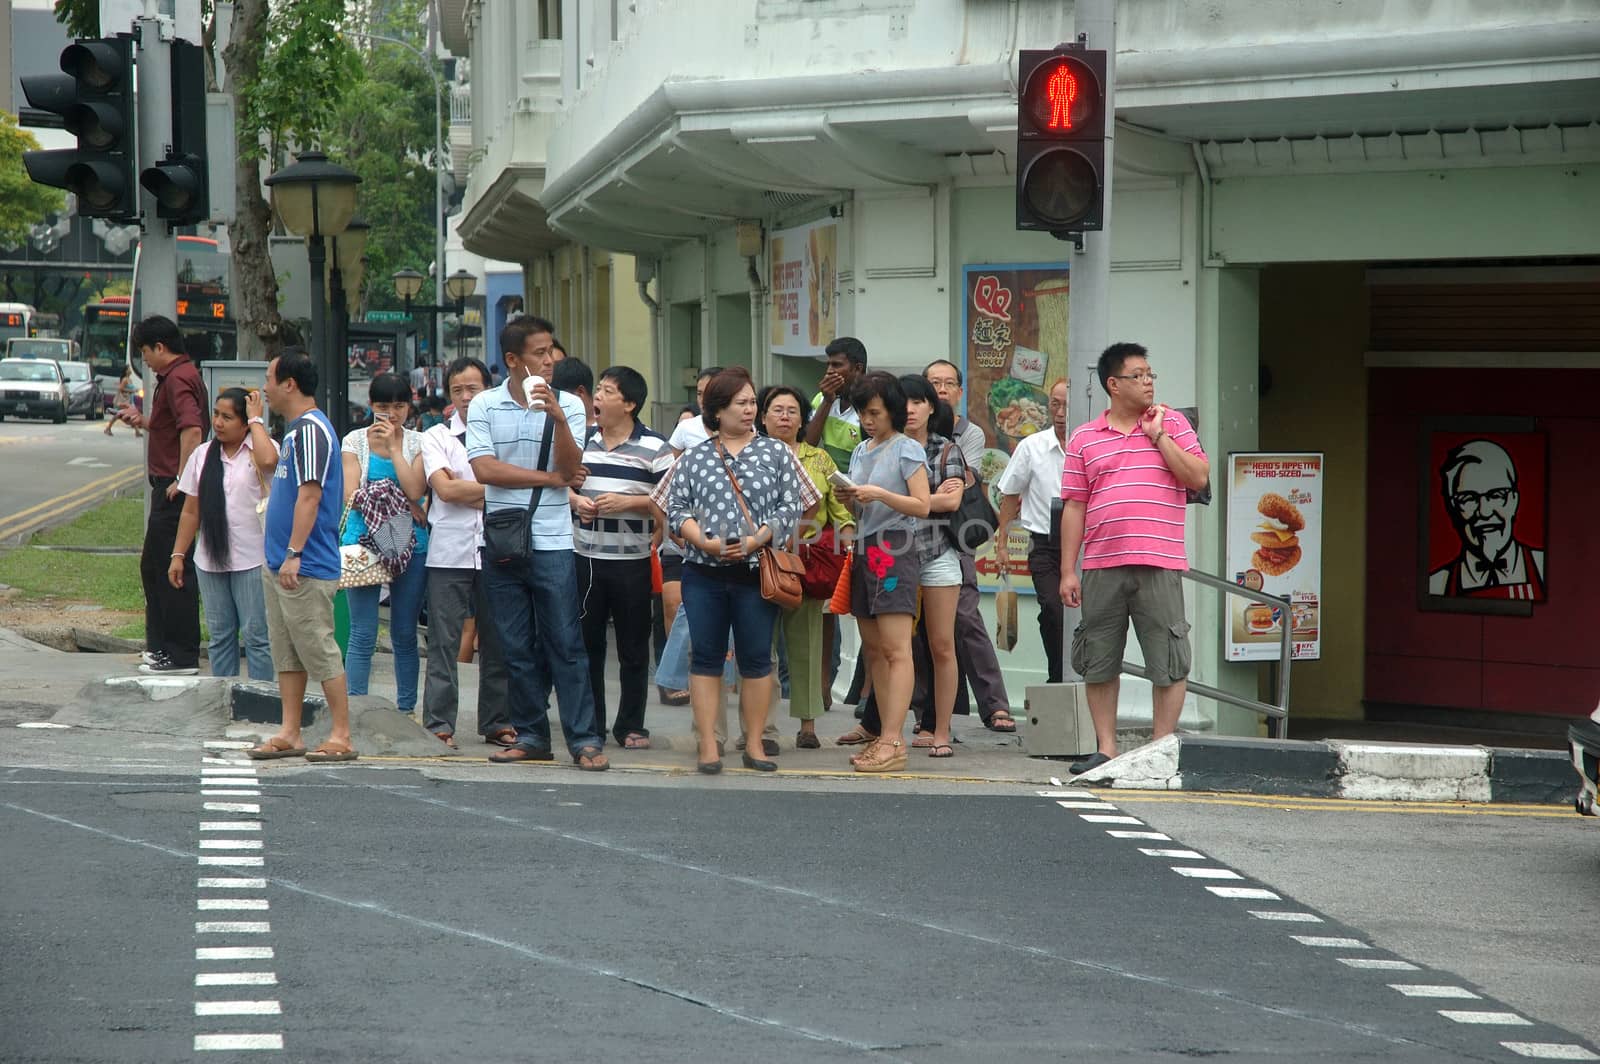 Singapore, Singapore - April 14, 2013: People crowd at Rochor road, Singapore.